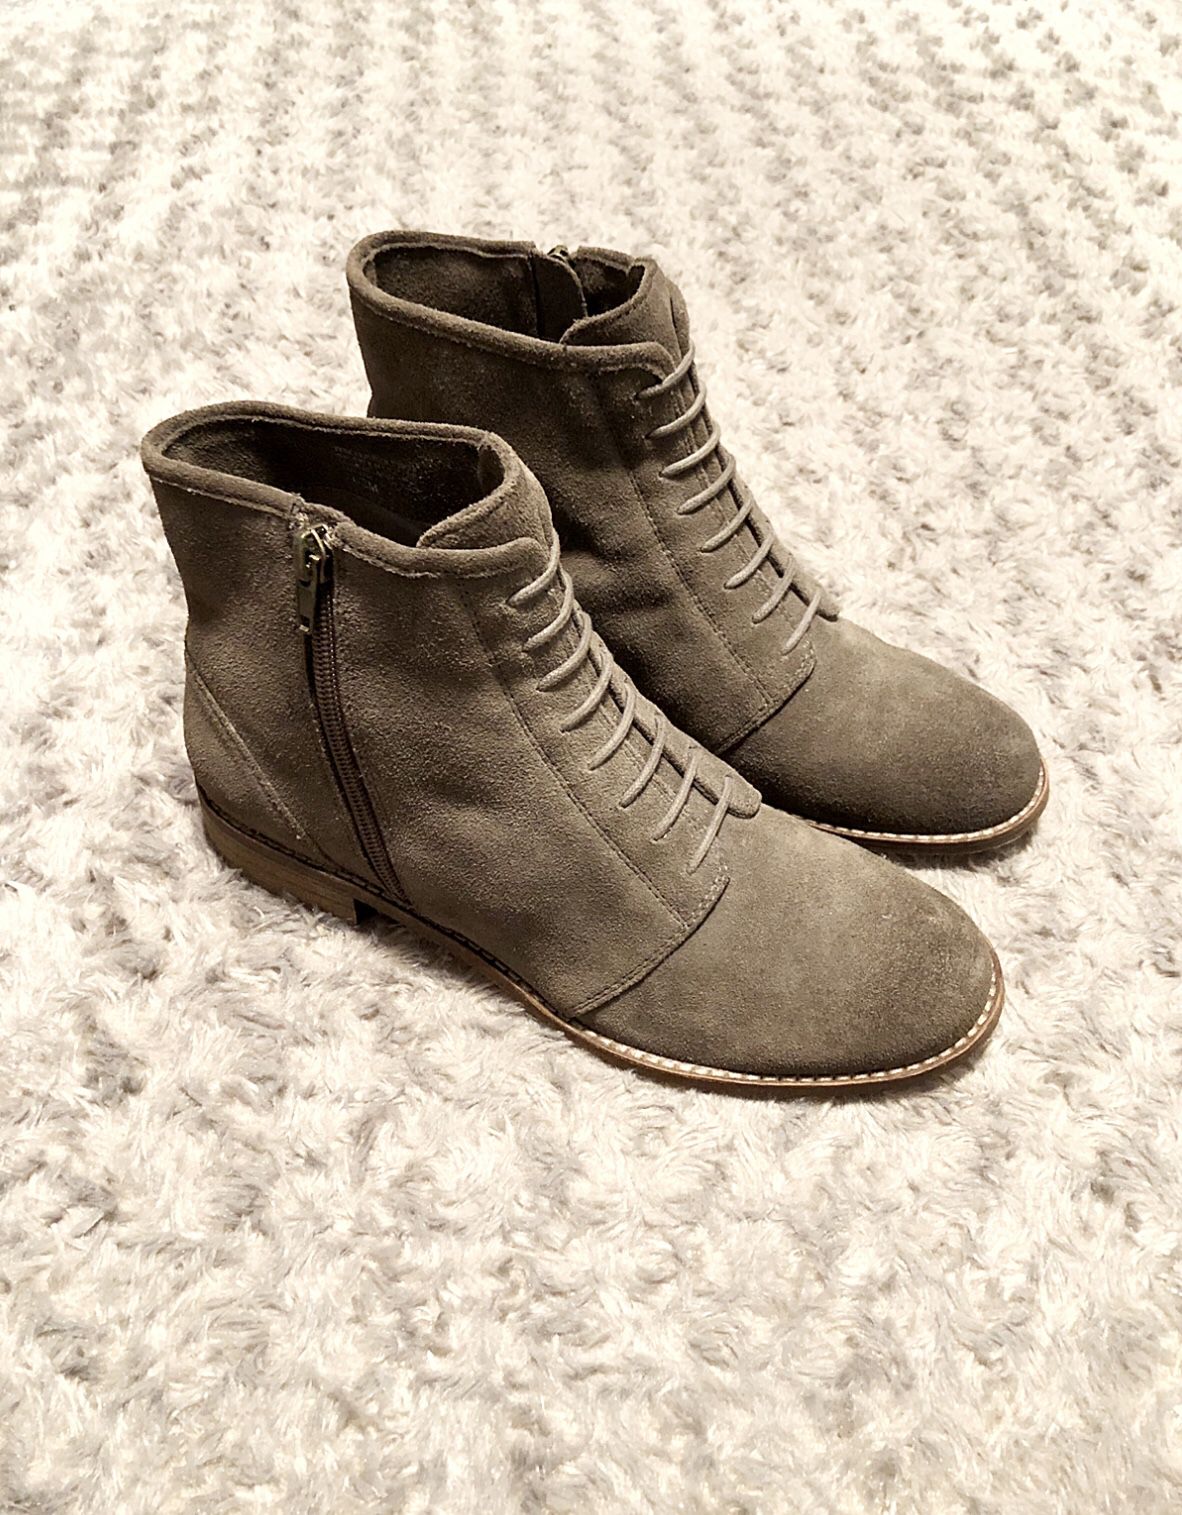 New! Women's Splendid Boots paid $168 size 7.5 never worn